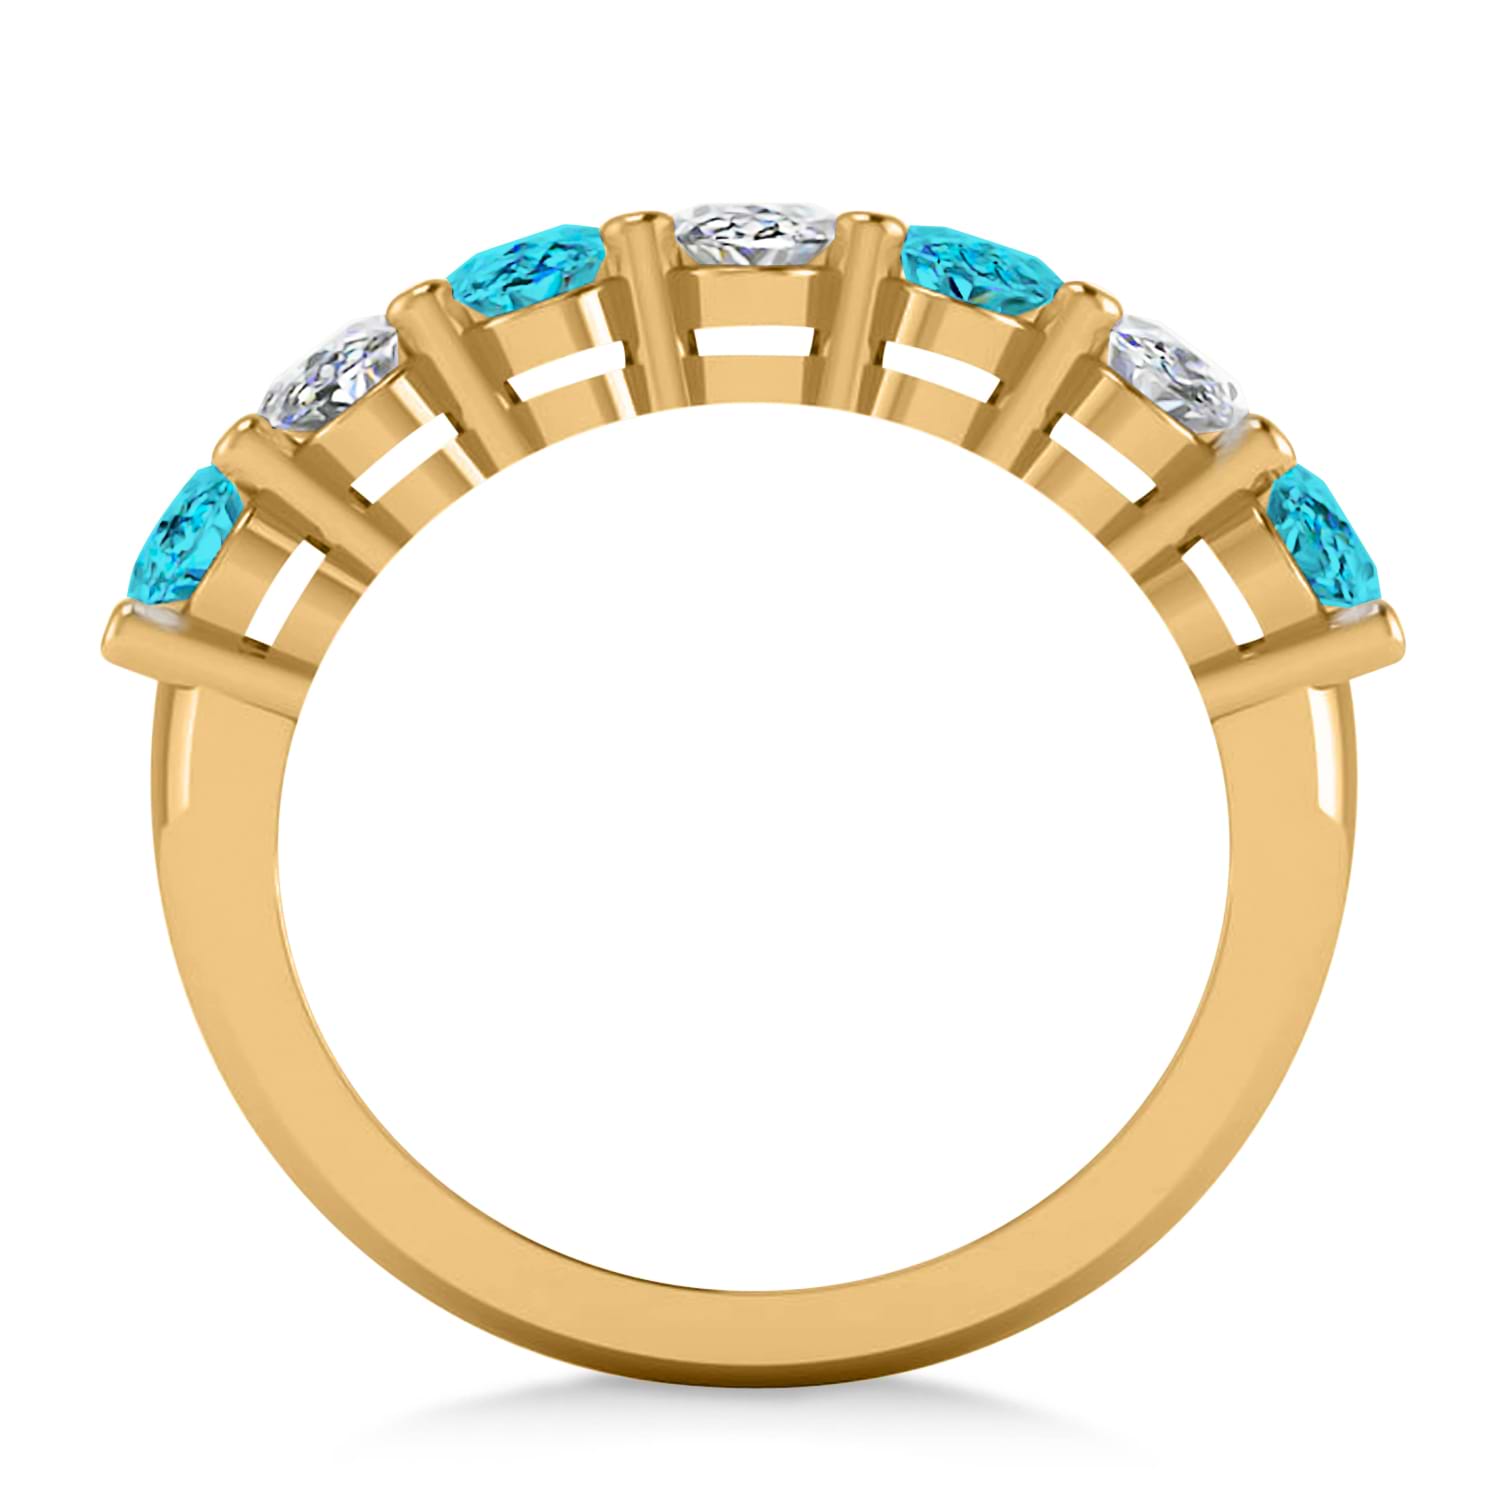 Oval Blue & White Diamond Seven Stone Ring 14k Yellow Gold (3.50ct)